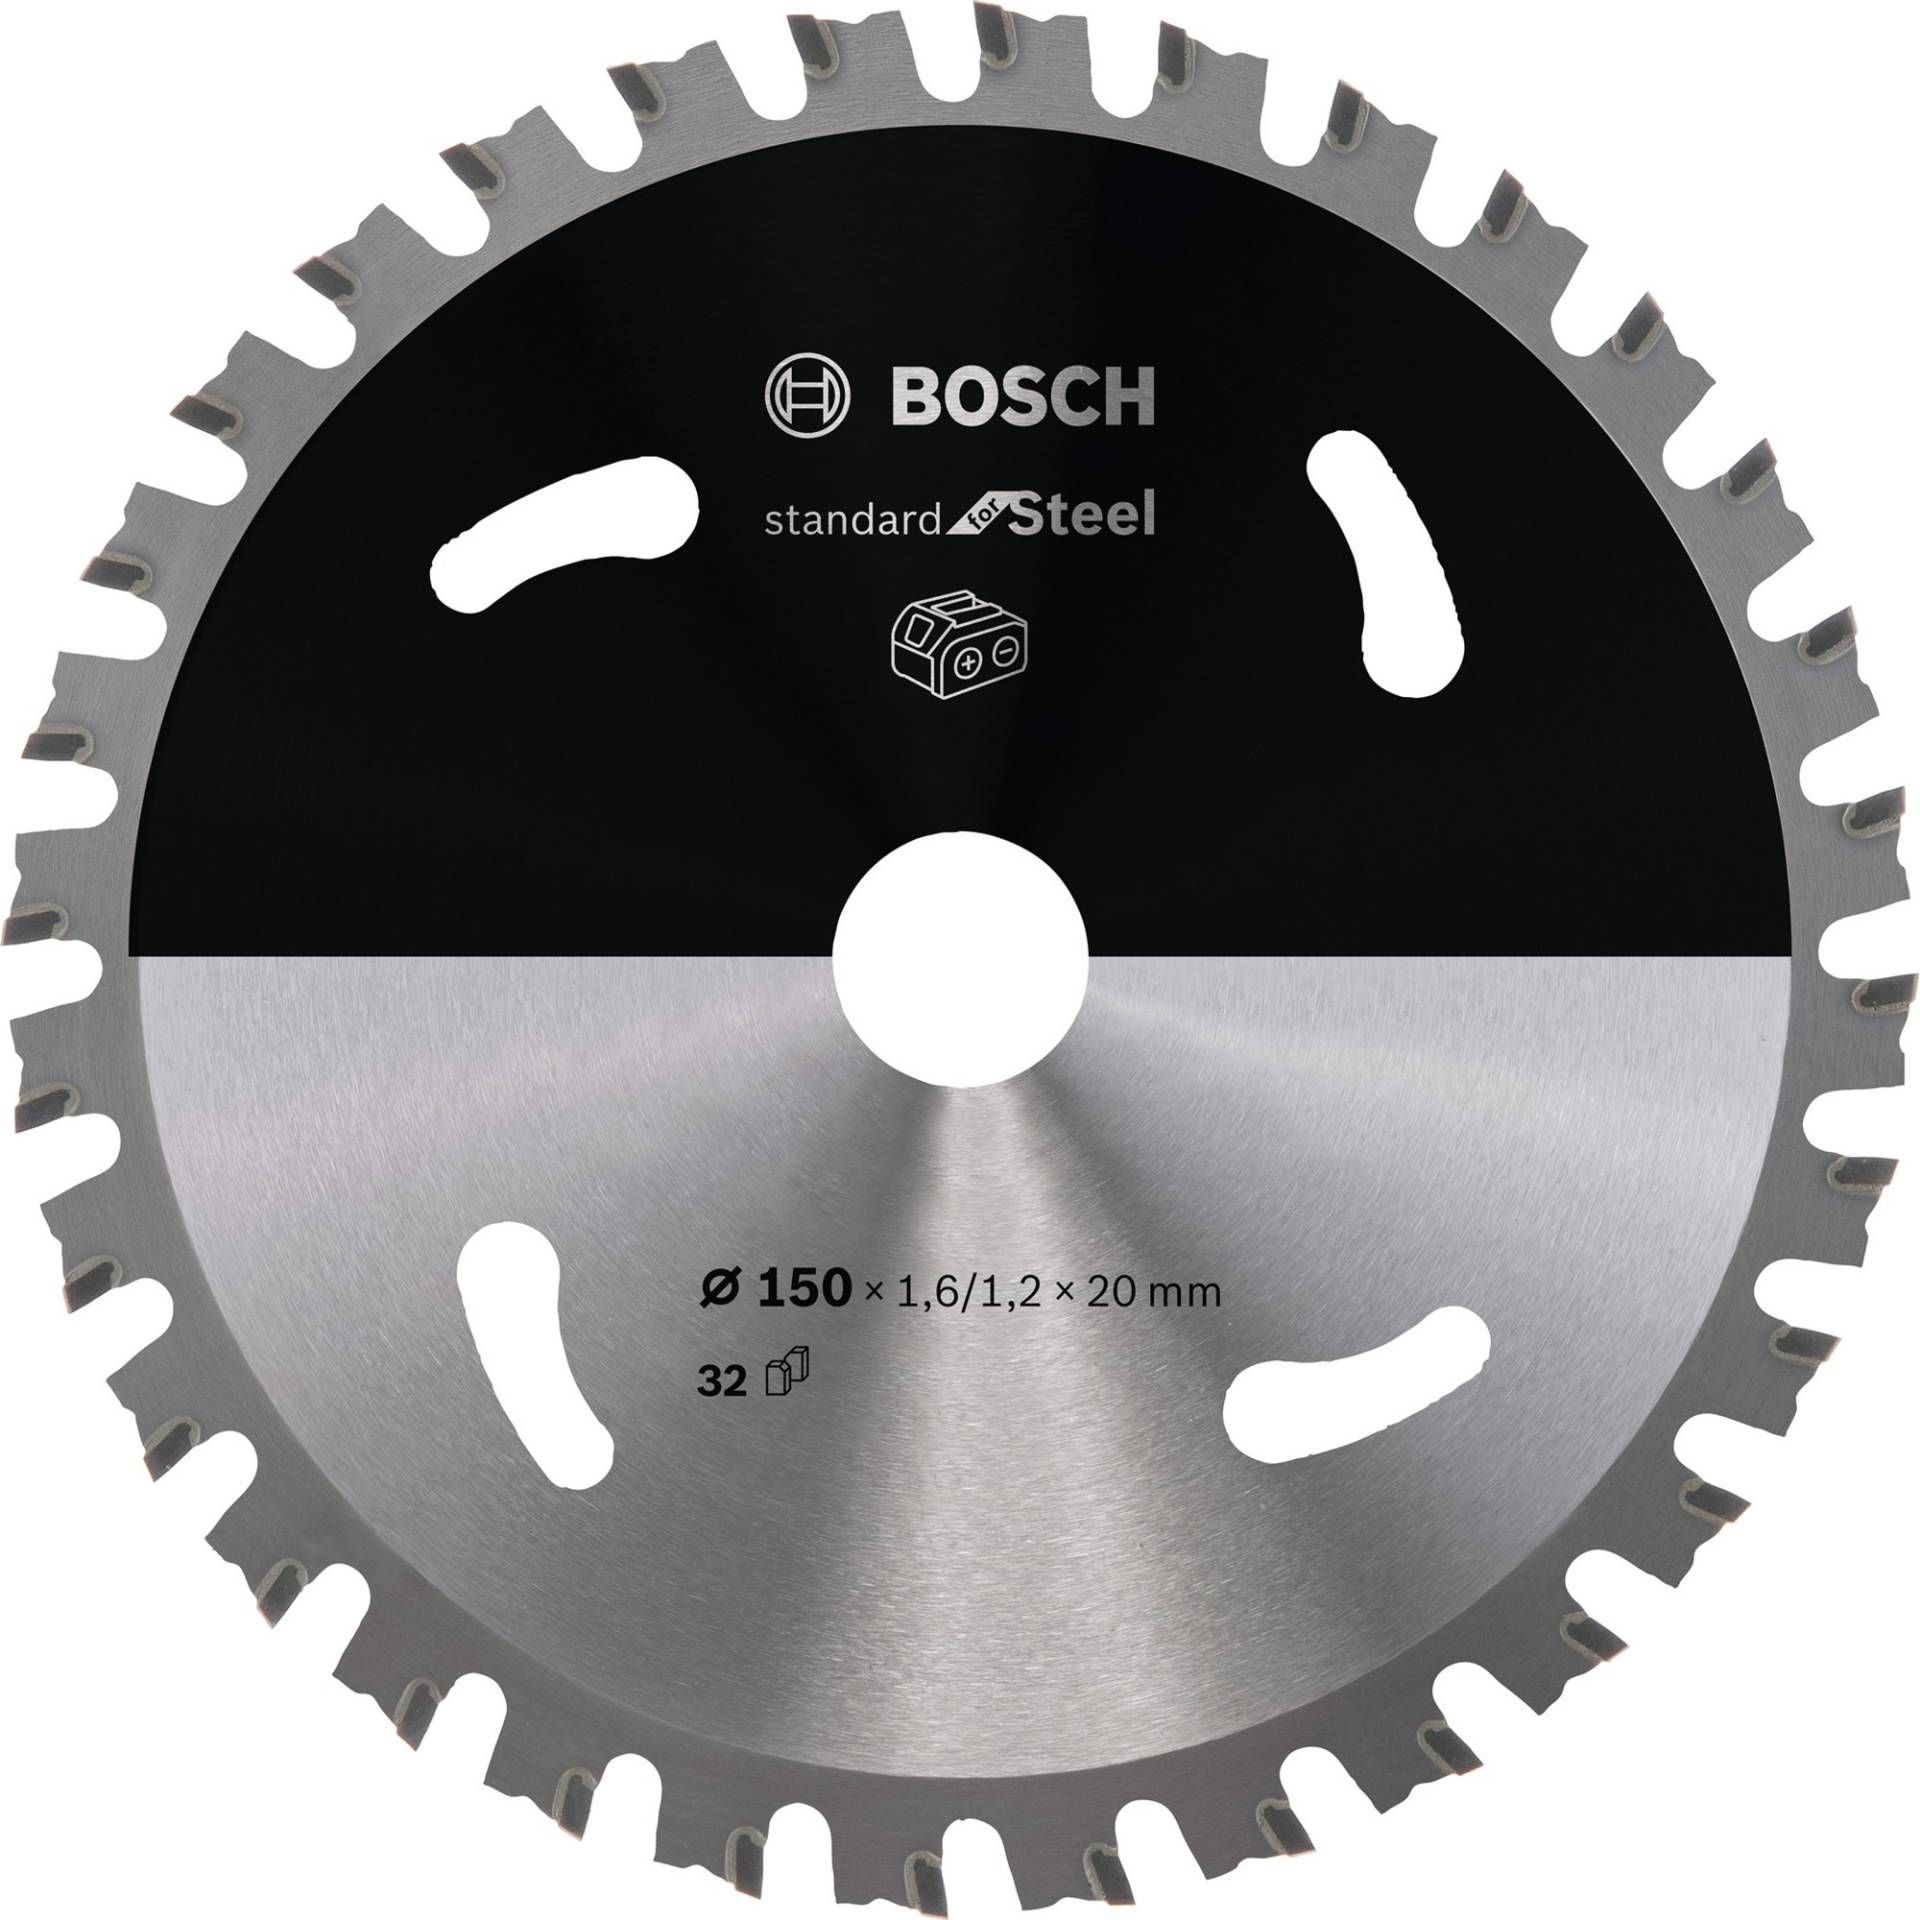 Kreissägeblatt Standard for Steel, Ø 150mm, 32Z von Bosch